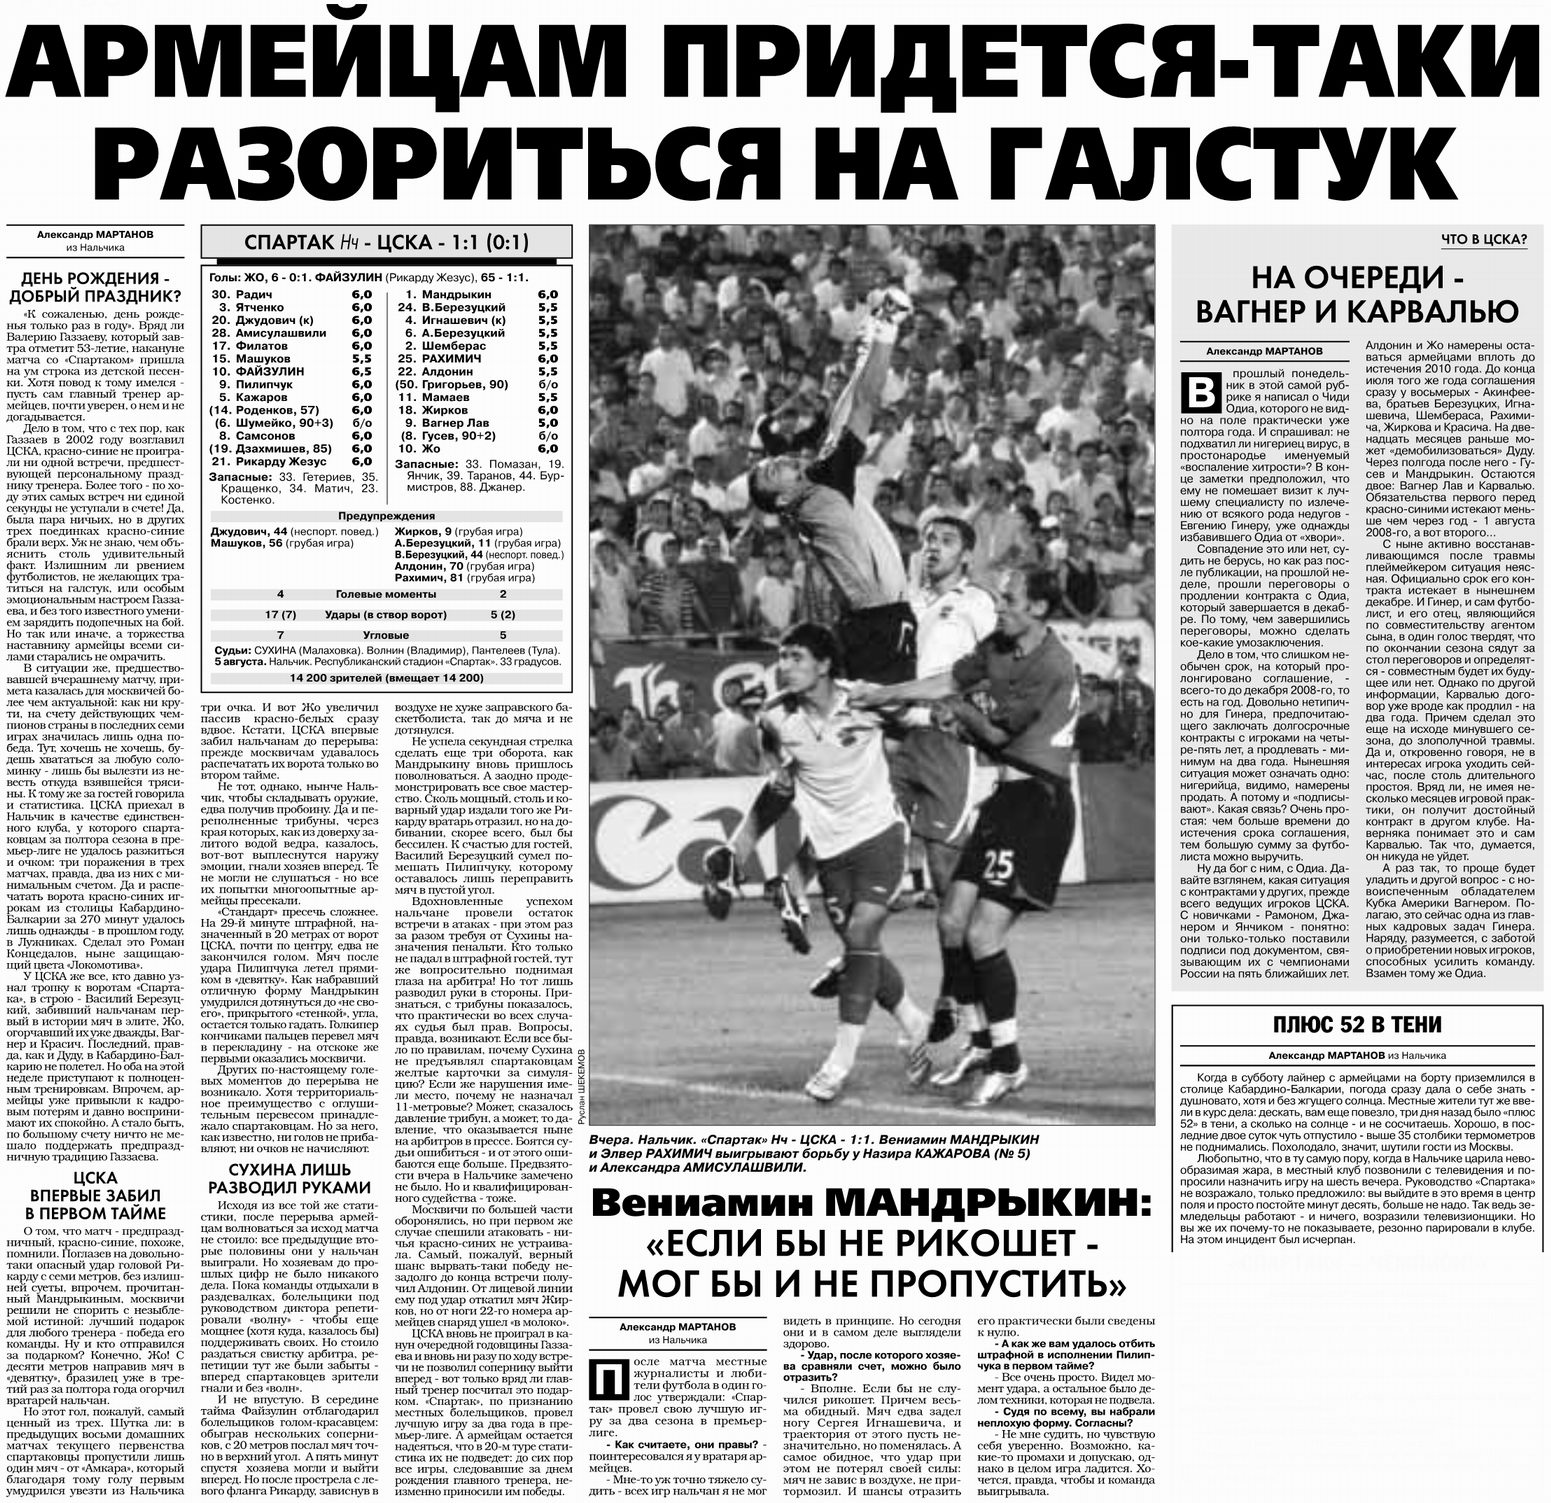 2007-08-05.SpartakNl-CSKA.1